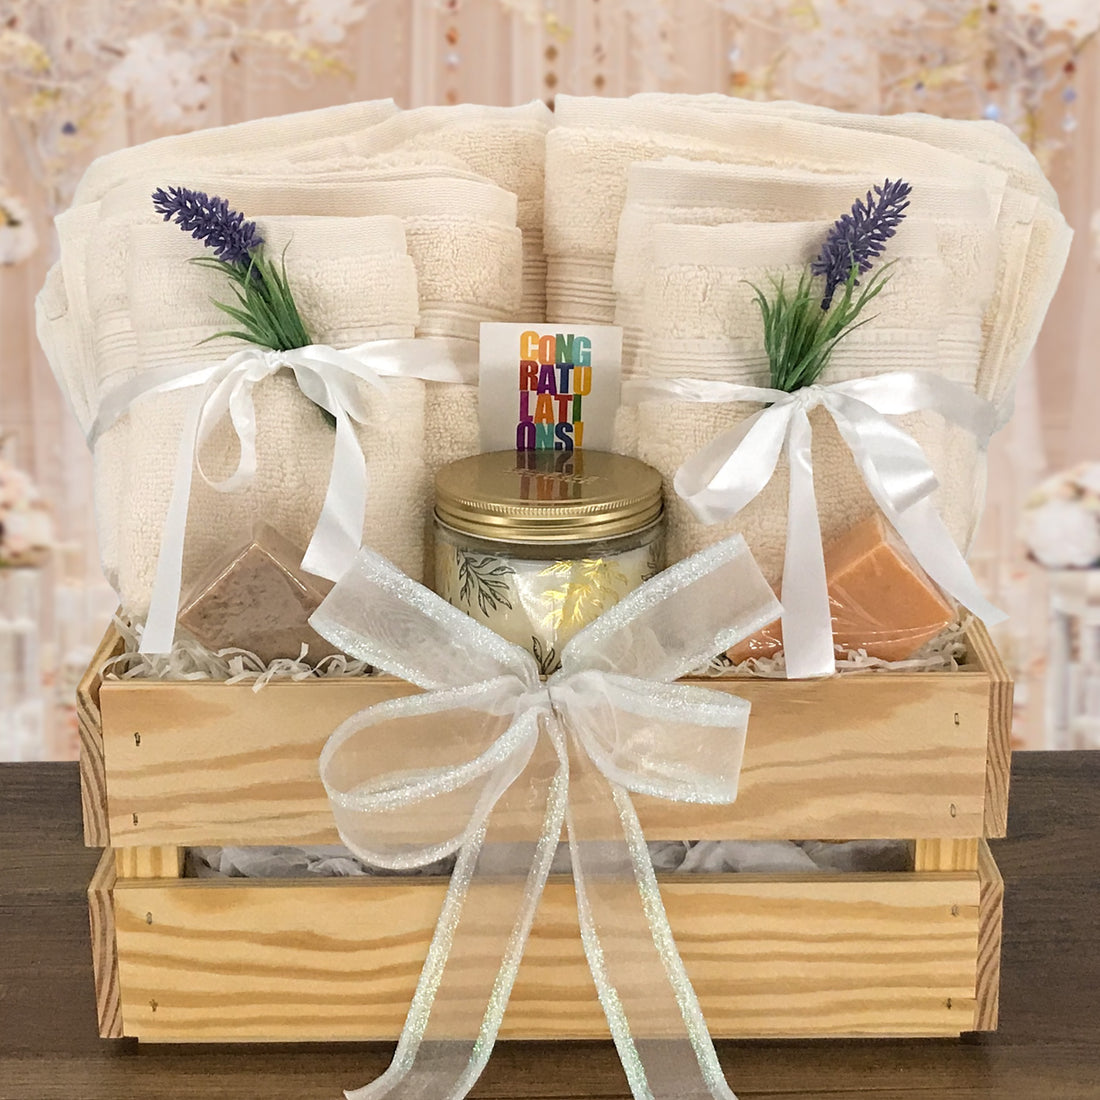 How to make a bridal shower gift basket